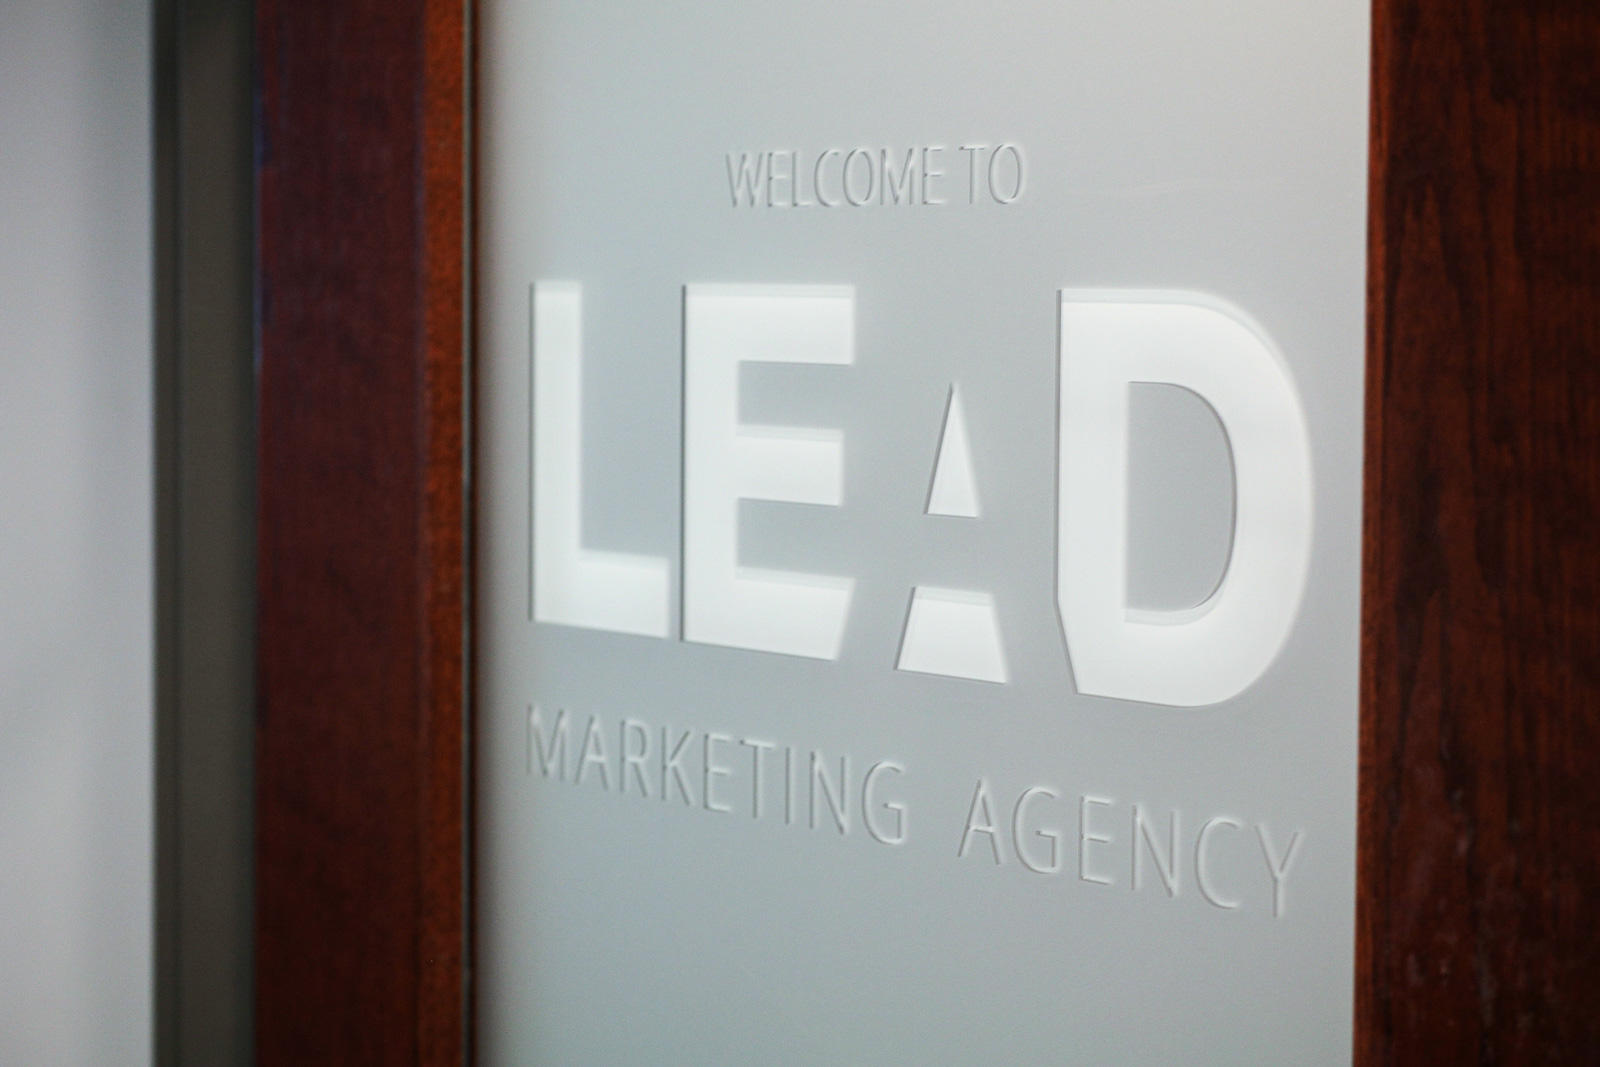 LEAD Marketing Agency Photo